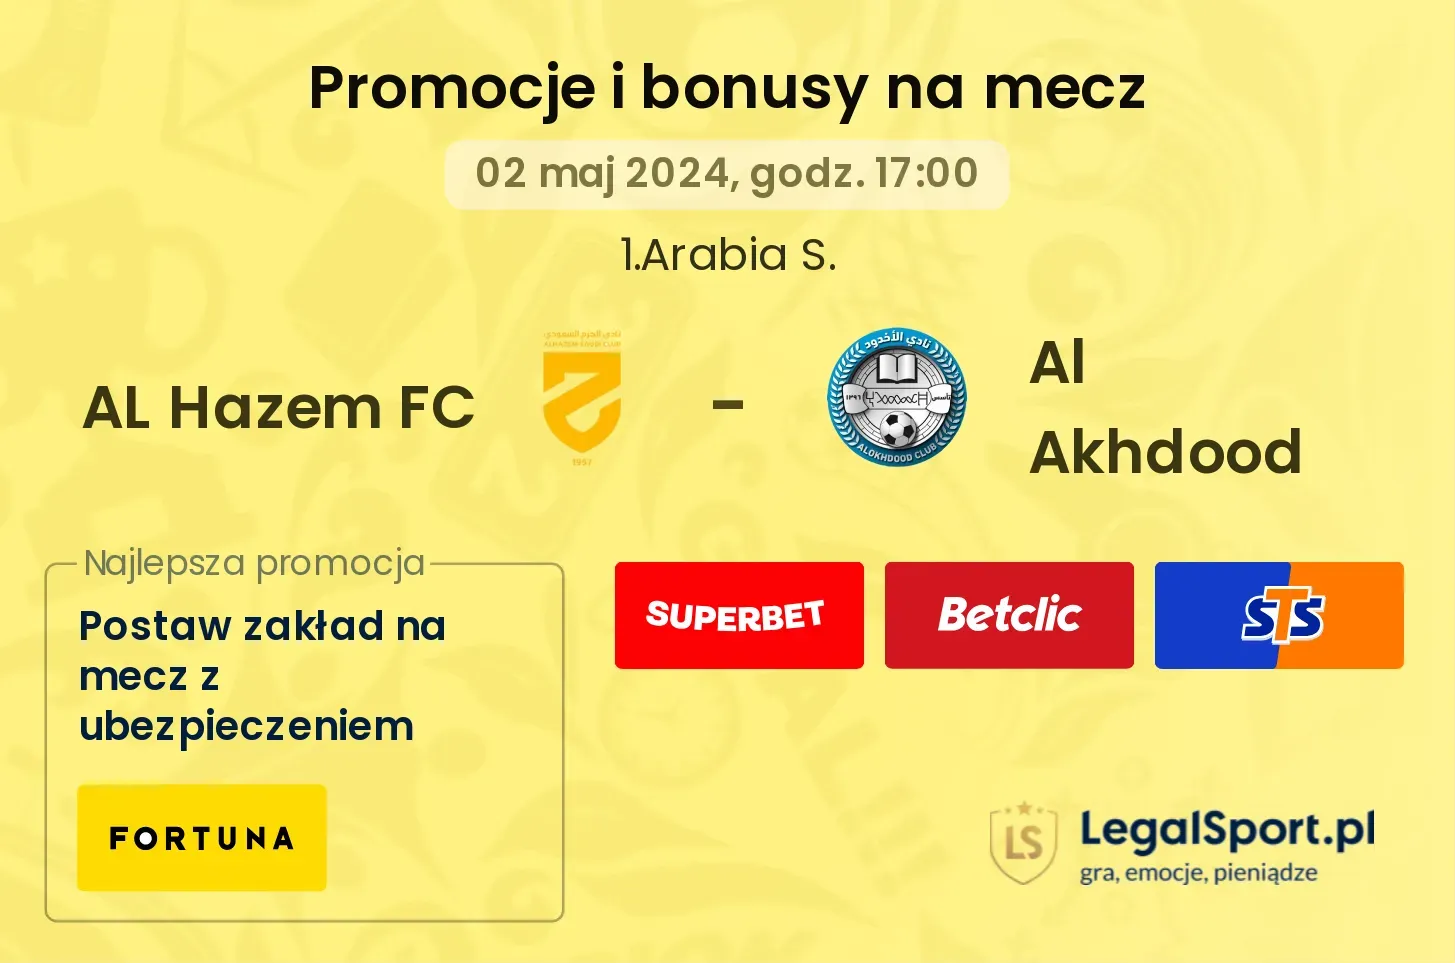 AL Hazem FC - Al Akhdood promocje bonusy na mecz